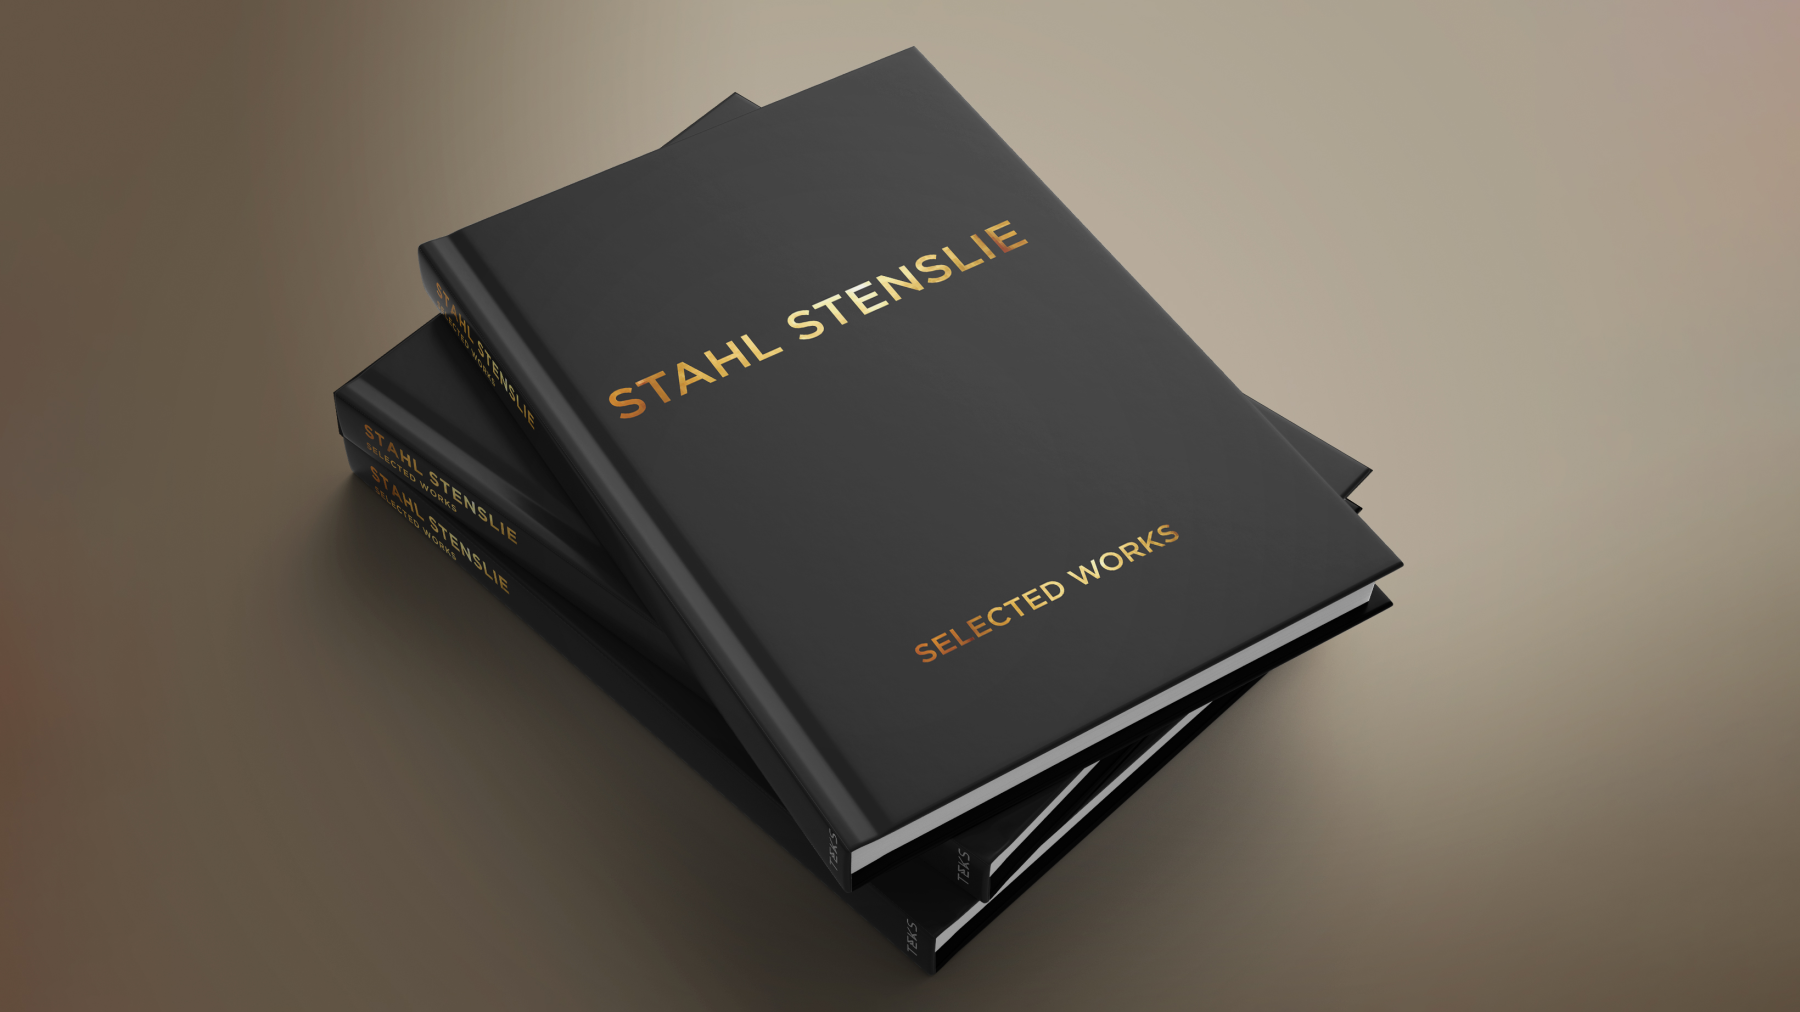 Stahl Stenslie – Selected Works